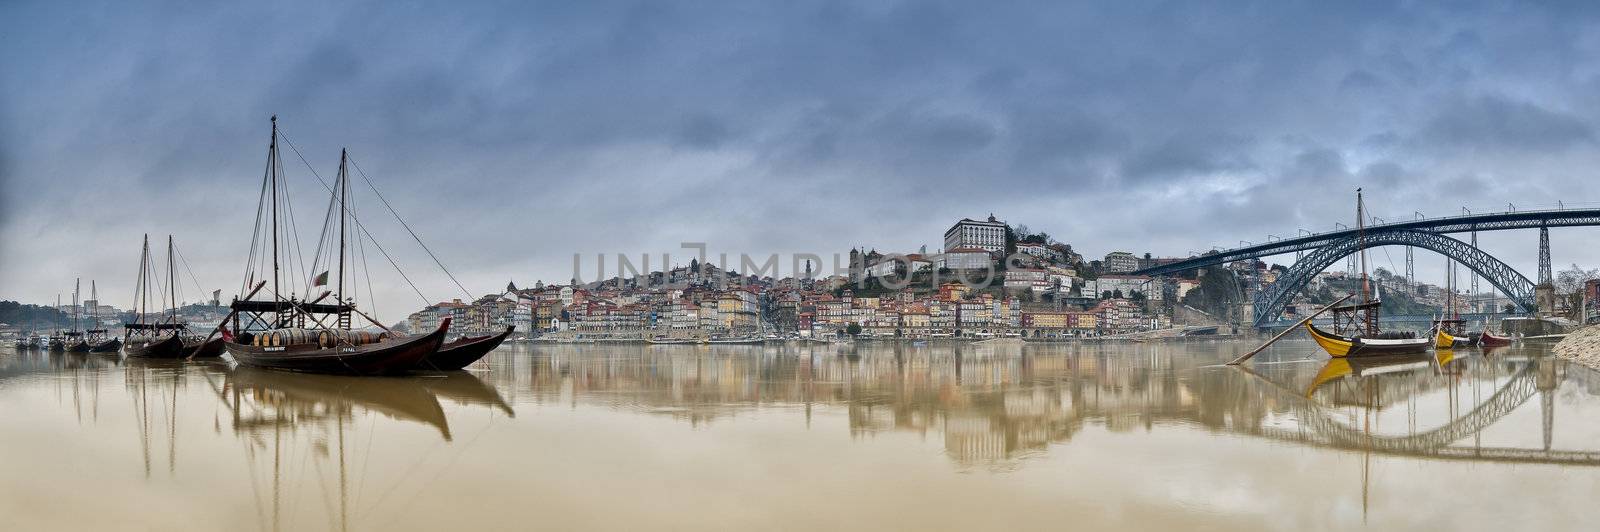 Douro by homydesign